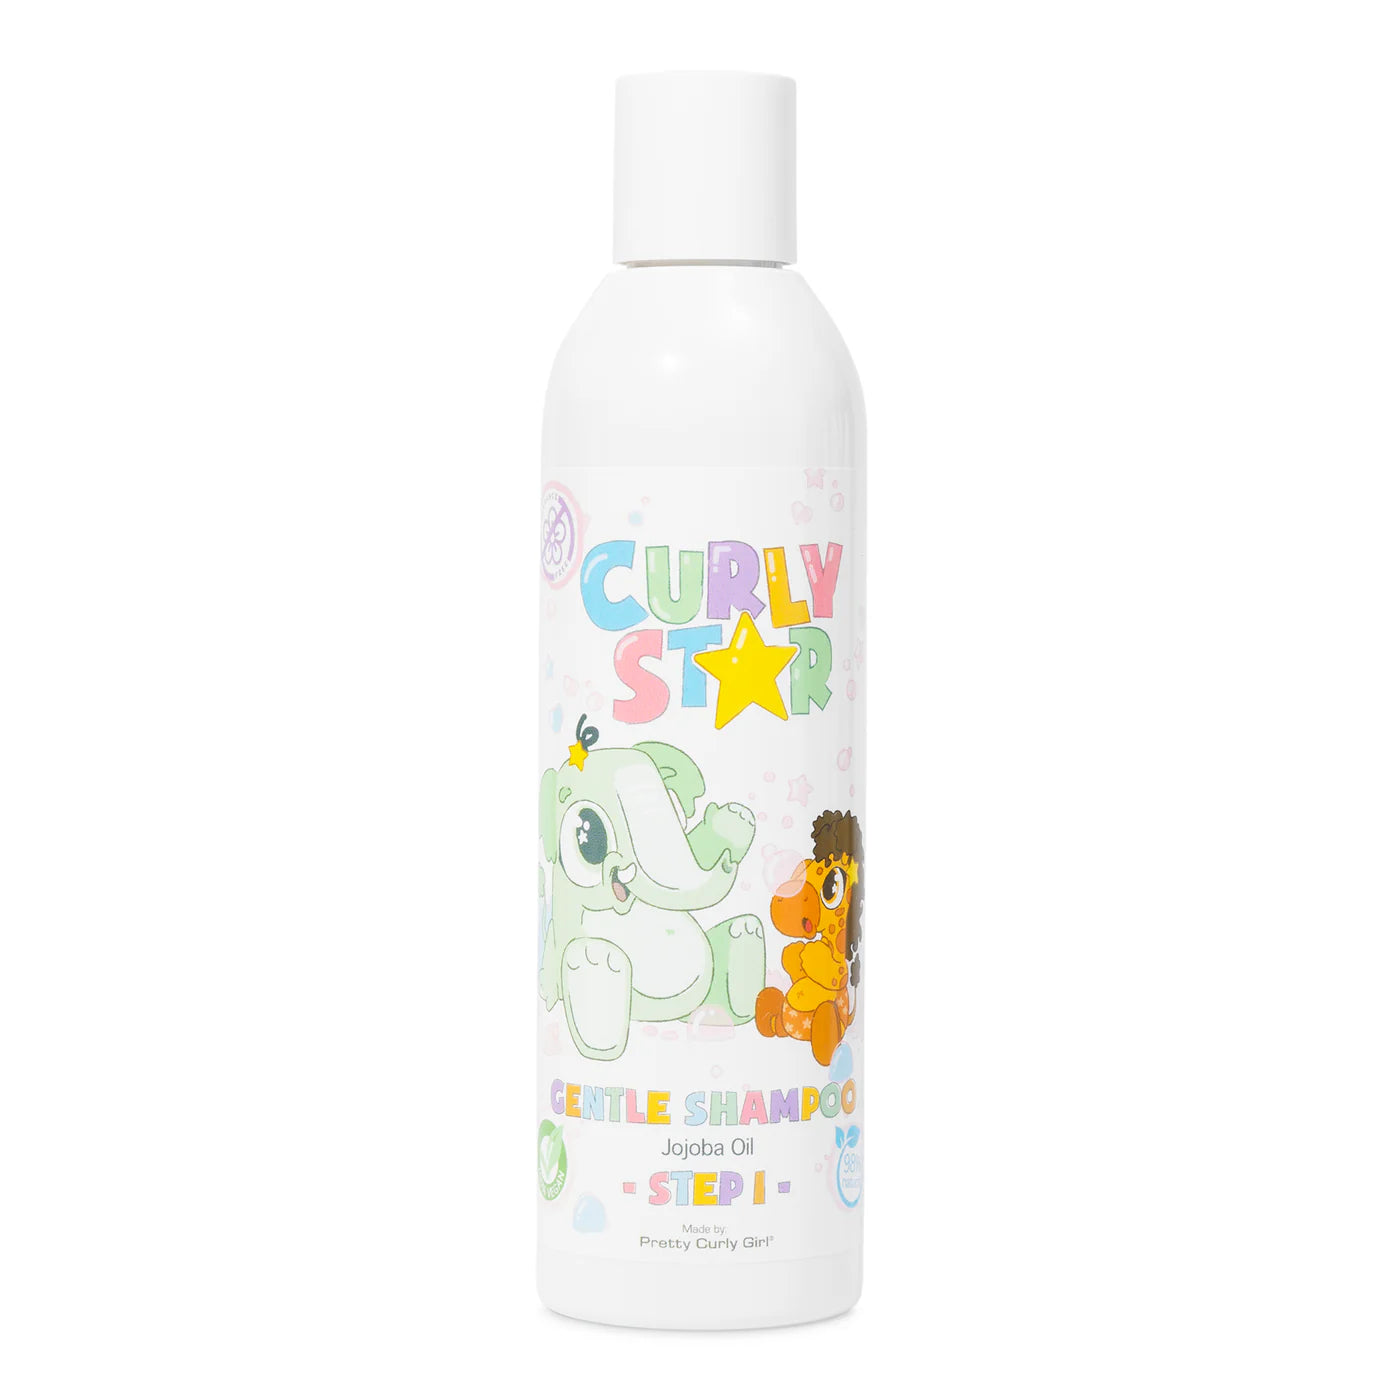 Curly Star - Gentle Shampoo 200ml Fragrance Free / No Parfum